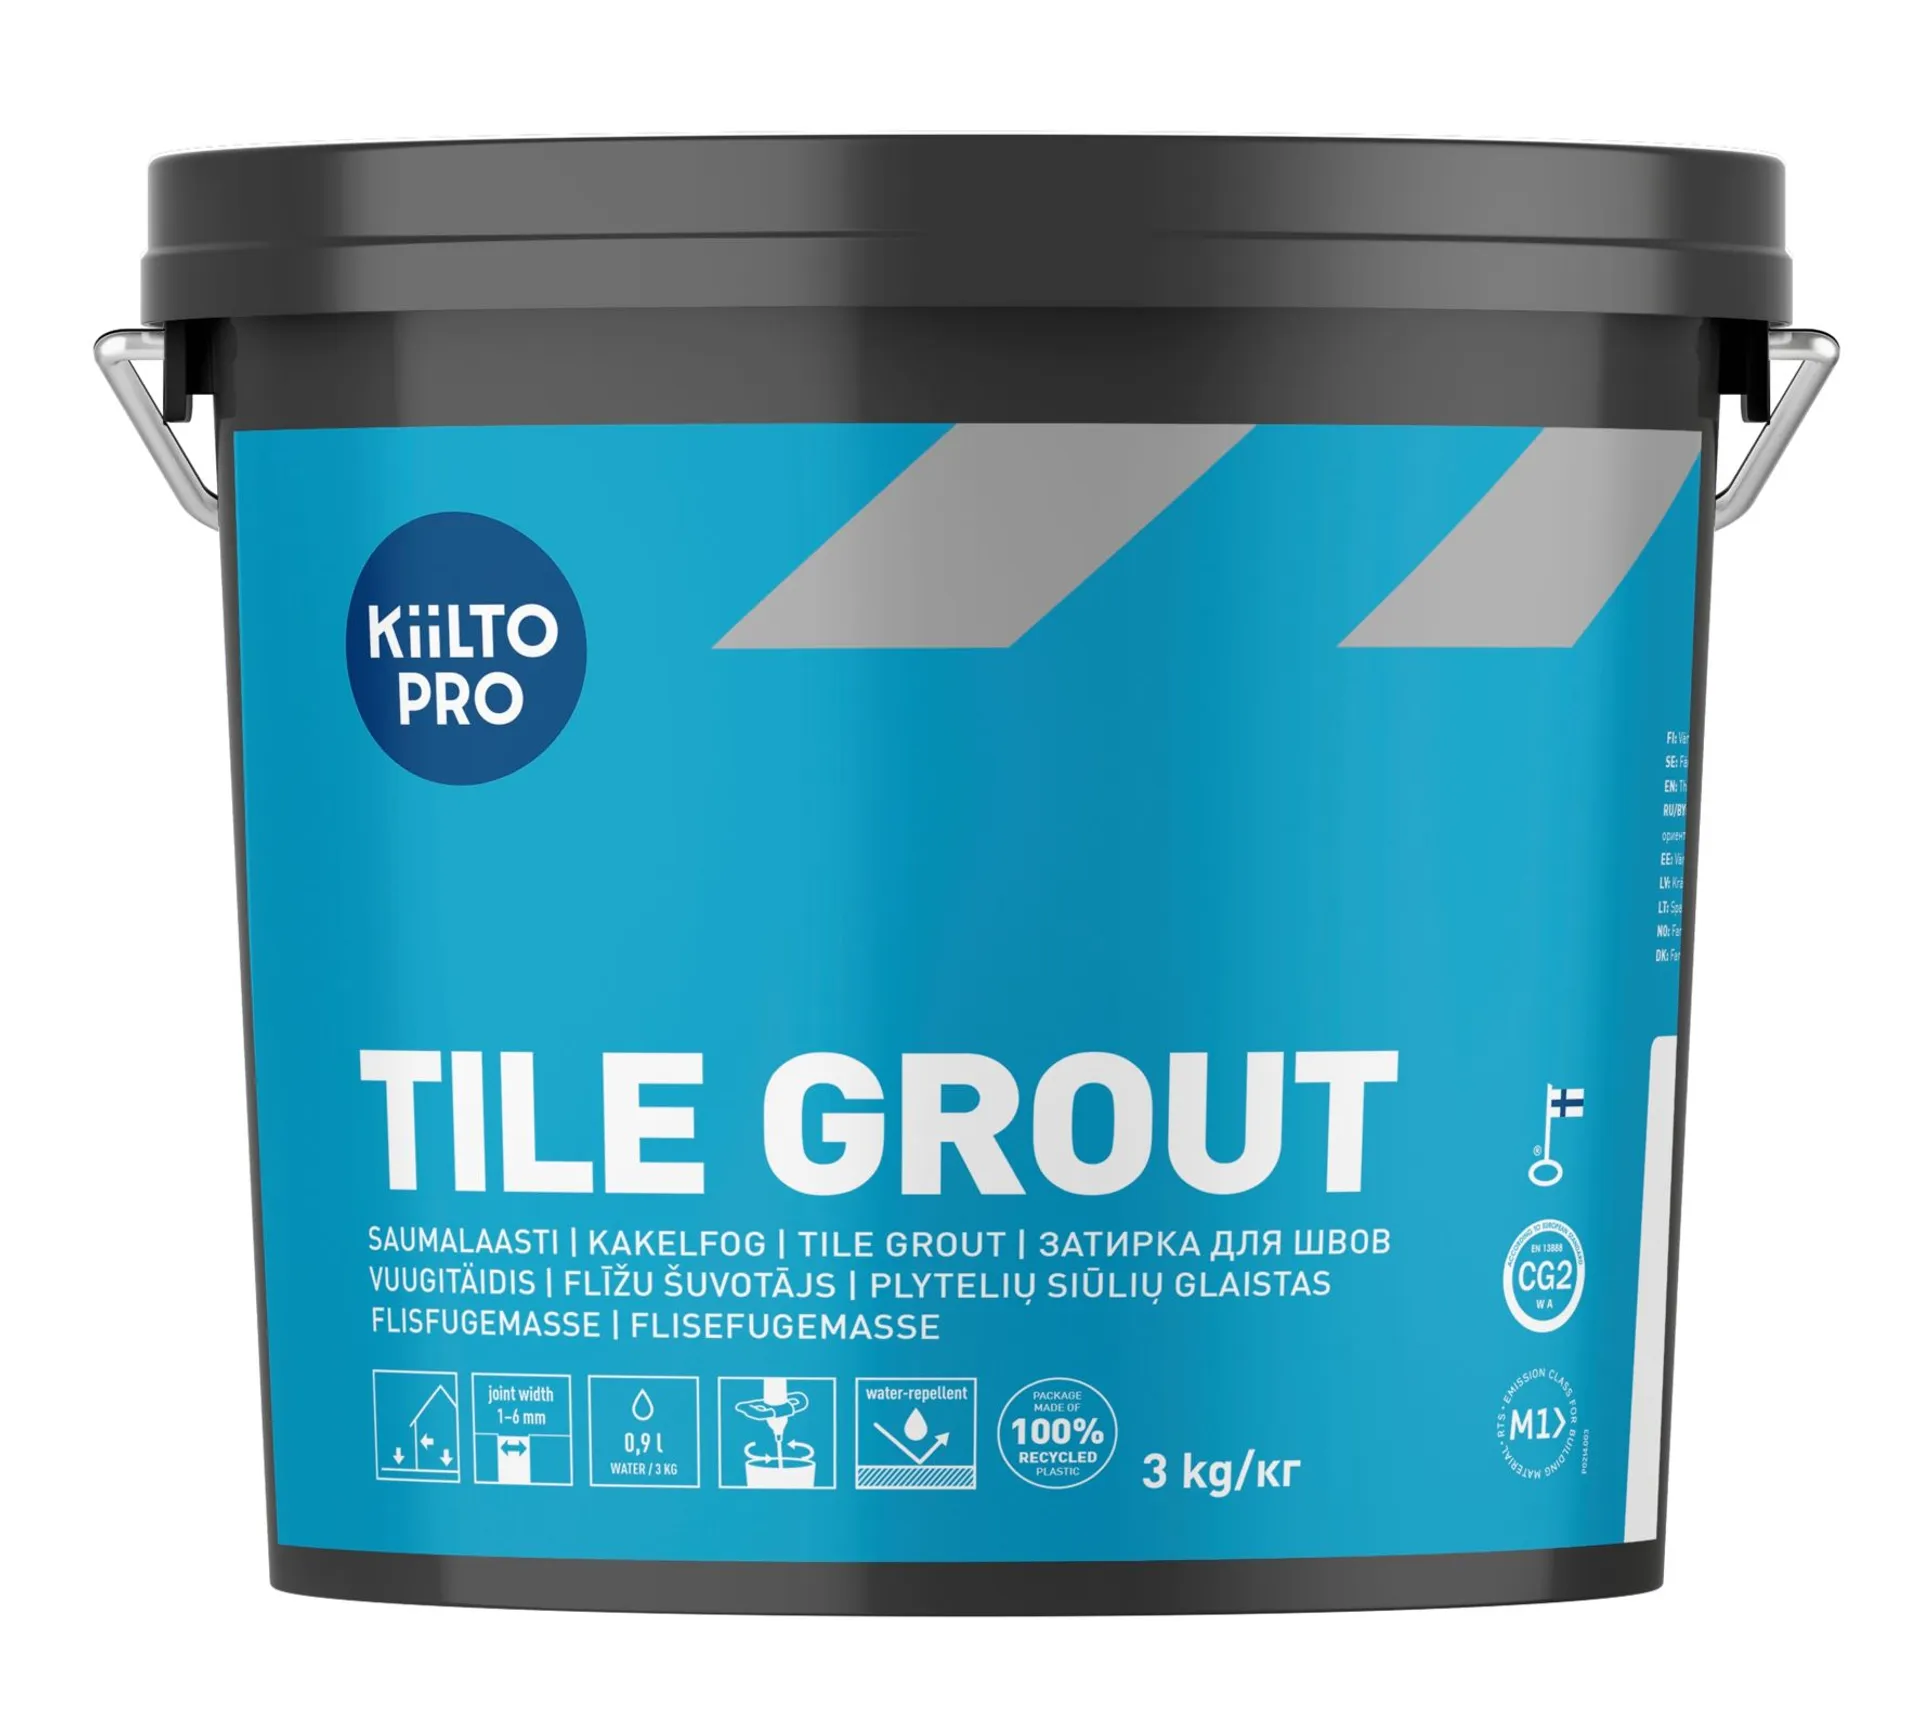 Kiilto Pro Tile grout saumalaasti 10 traffic white 3 kg